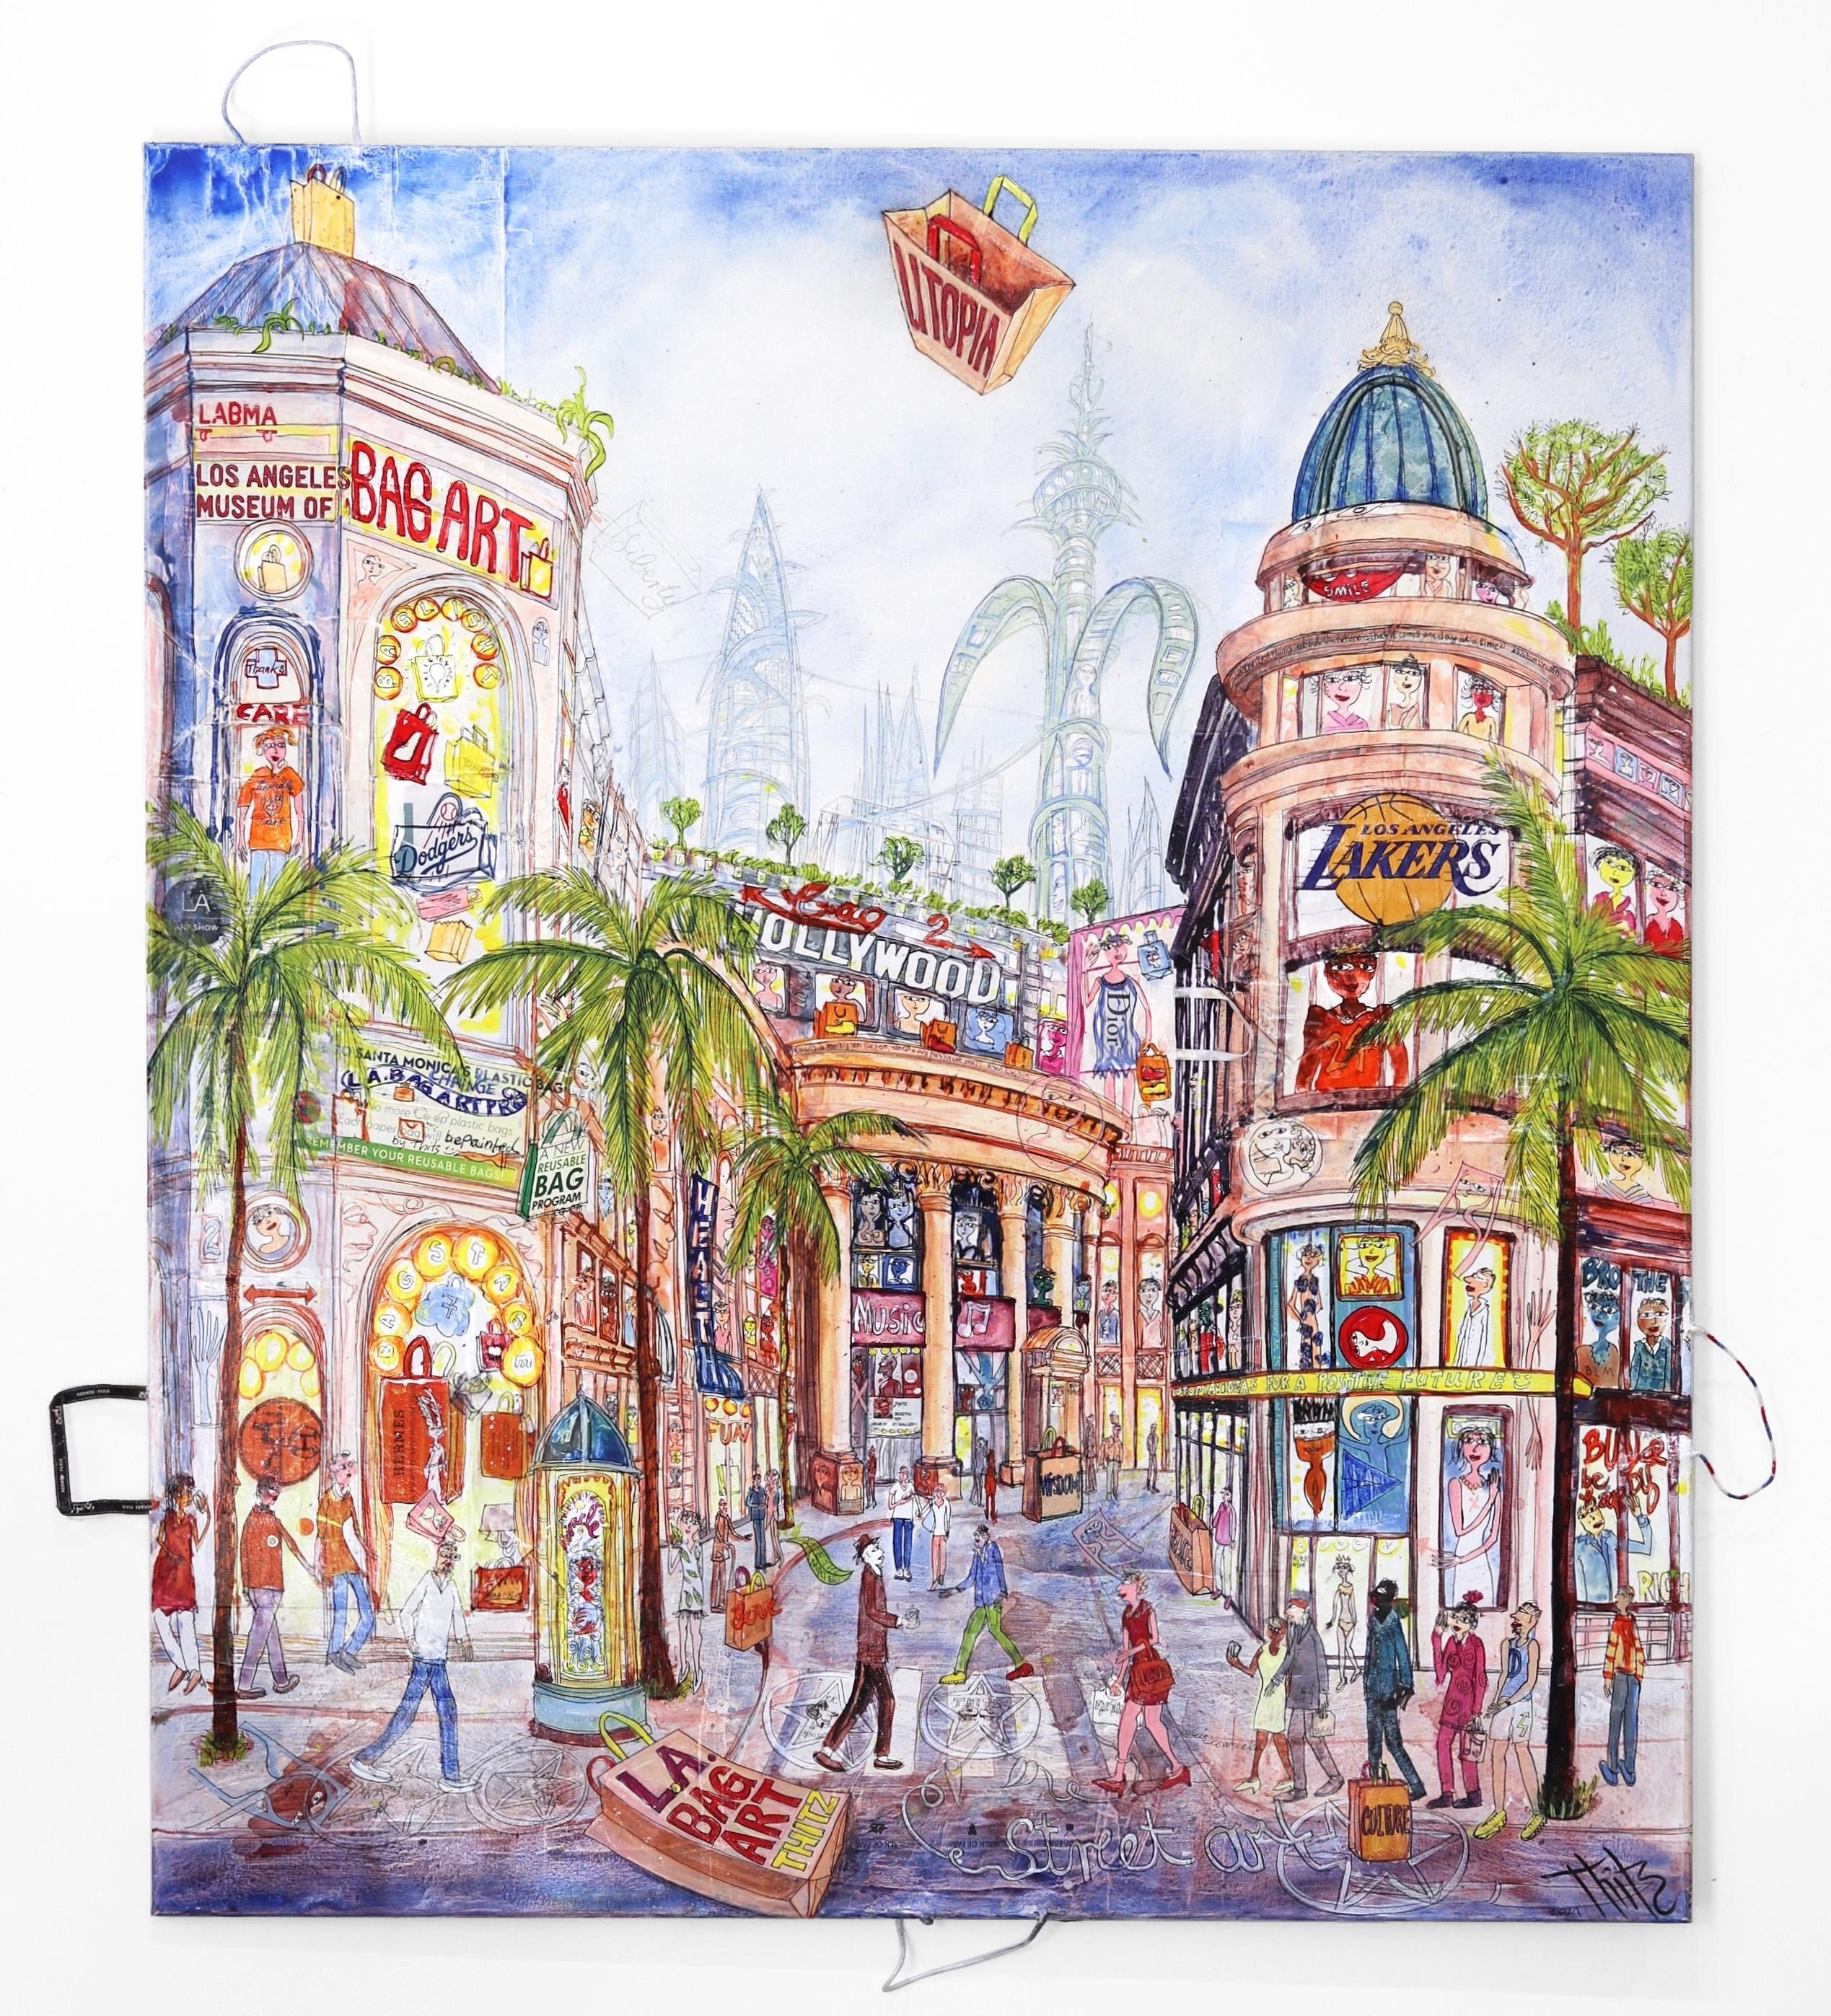 LA Bag Art Rodeo Drive - Large Colorful Oversized Original Cityscape Painting